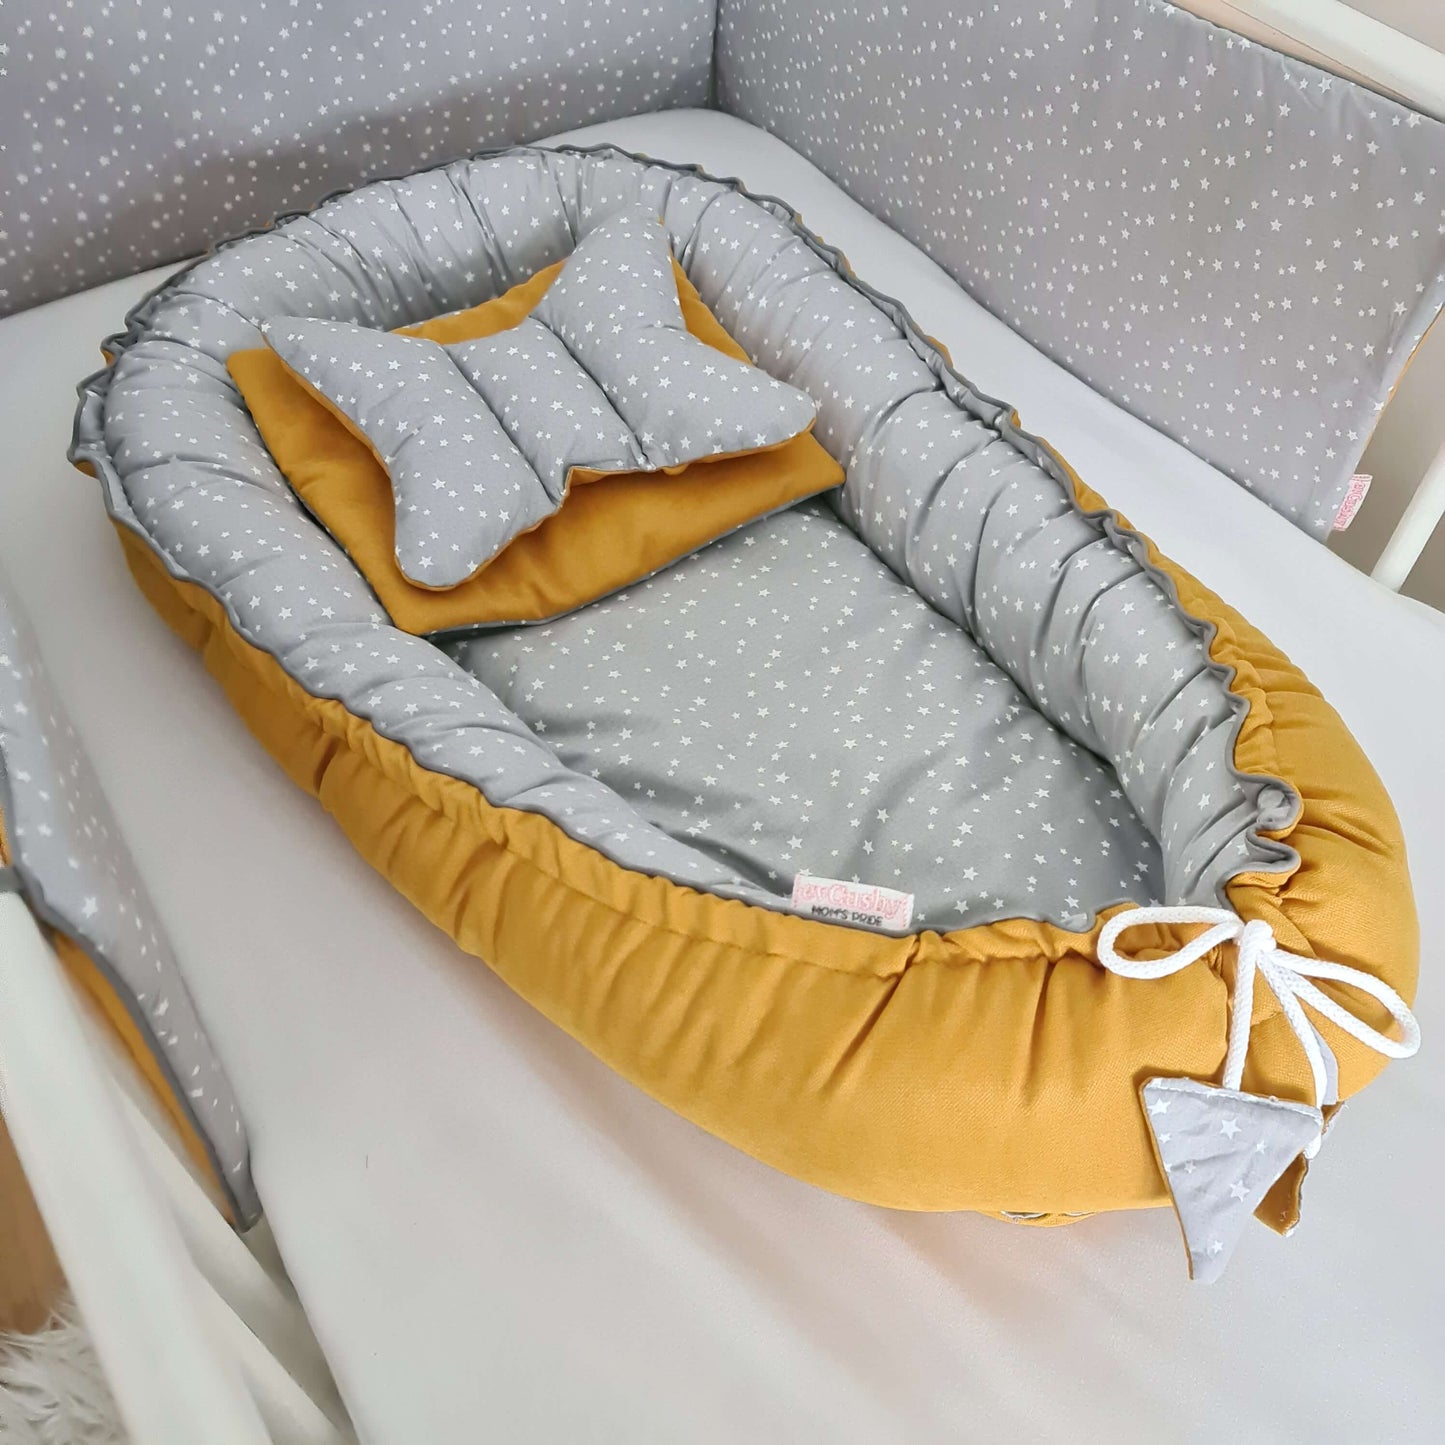 baby sleep pod with mattress pad pillows for newborn baby evcushy safe nest